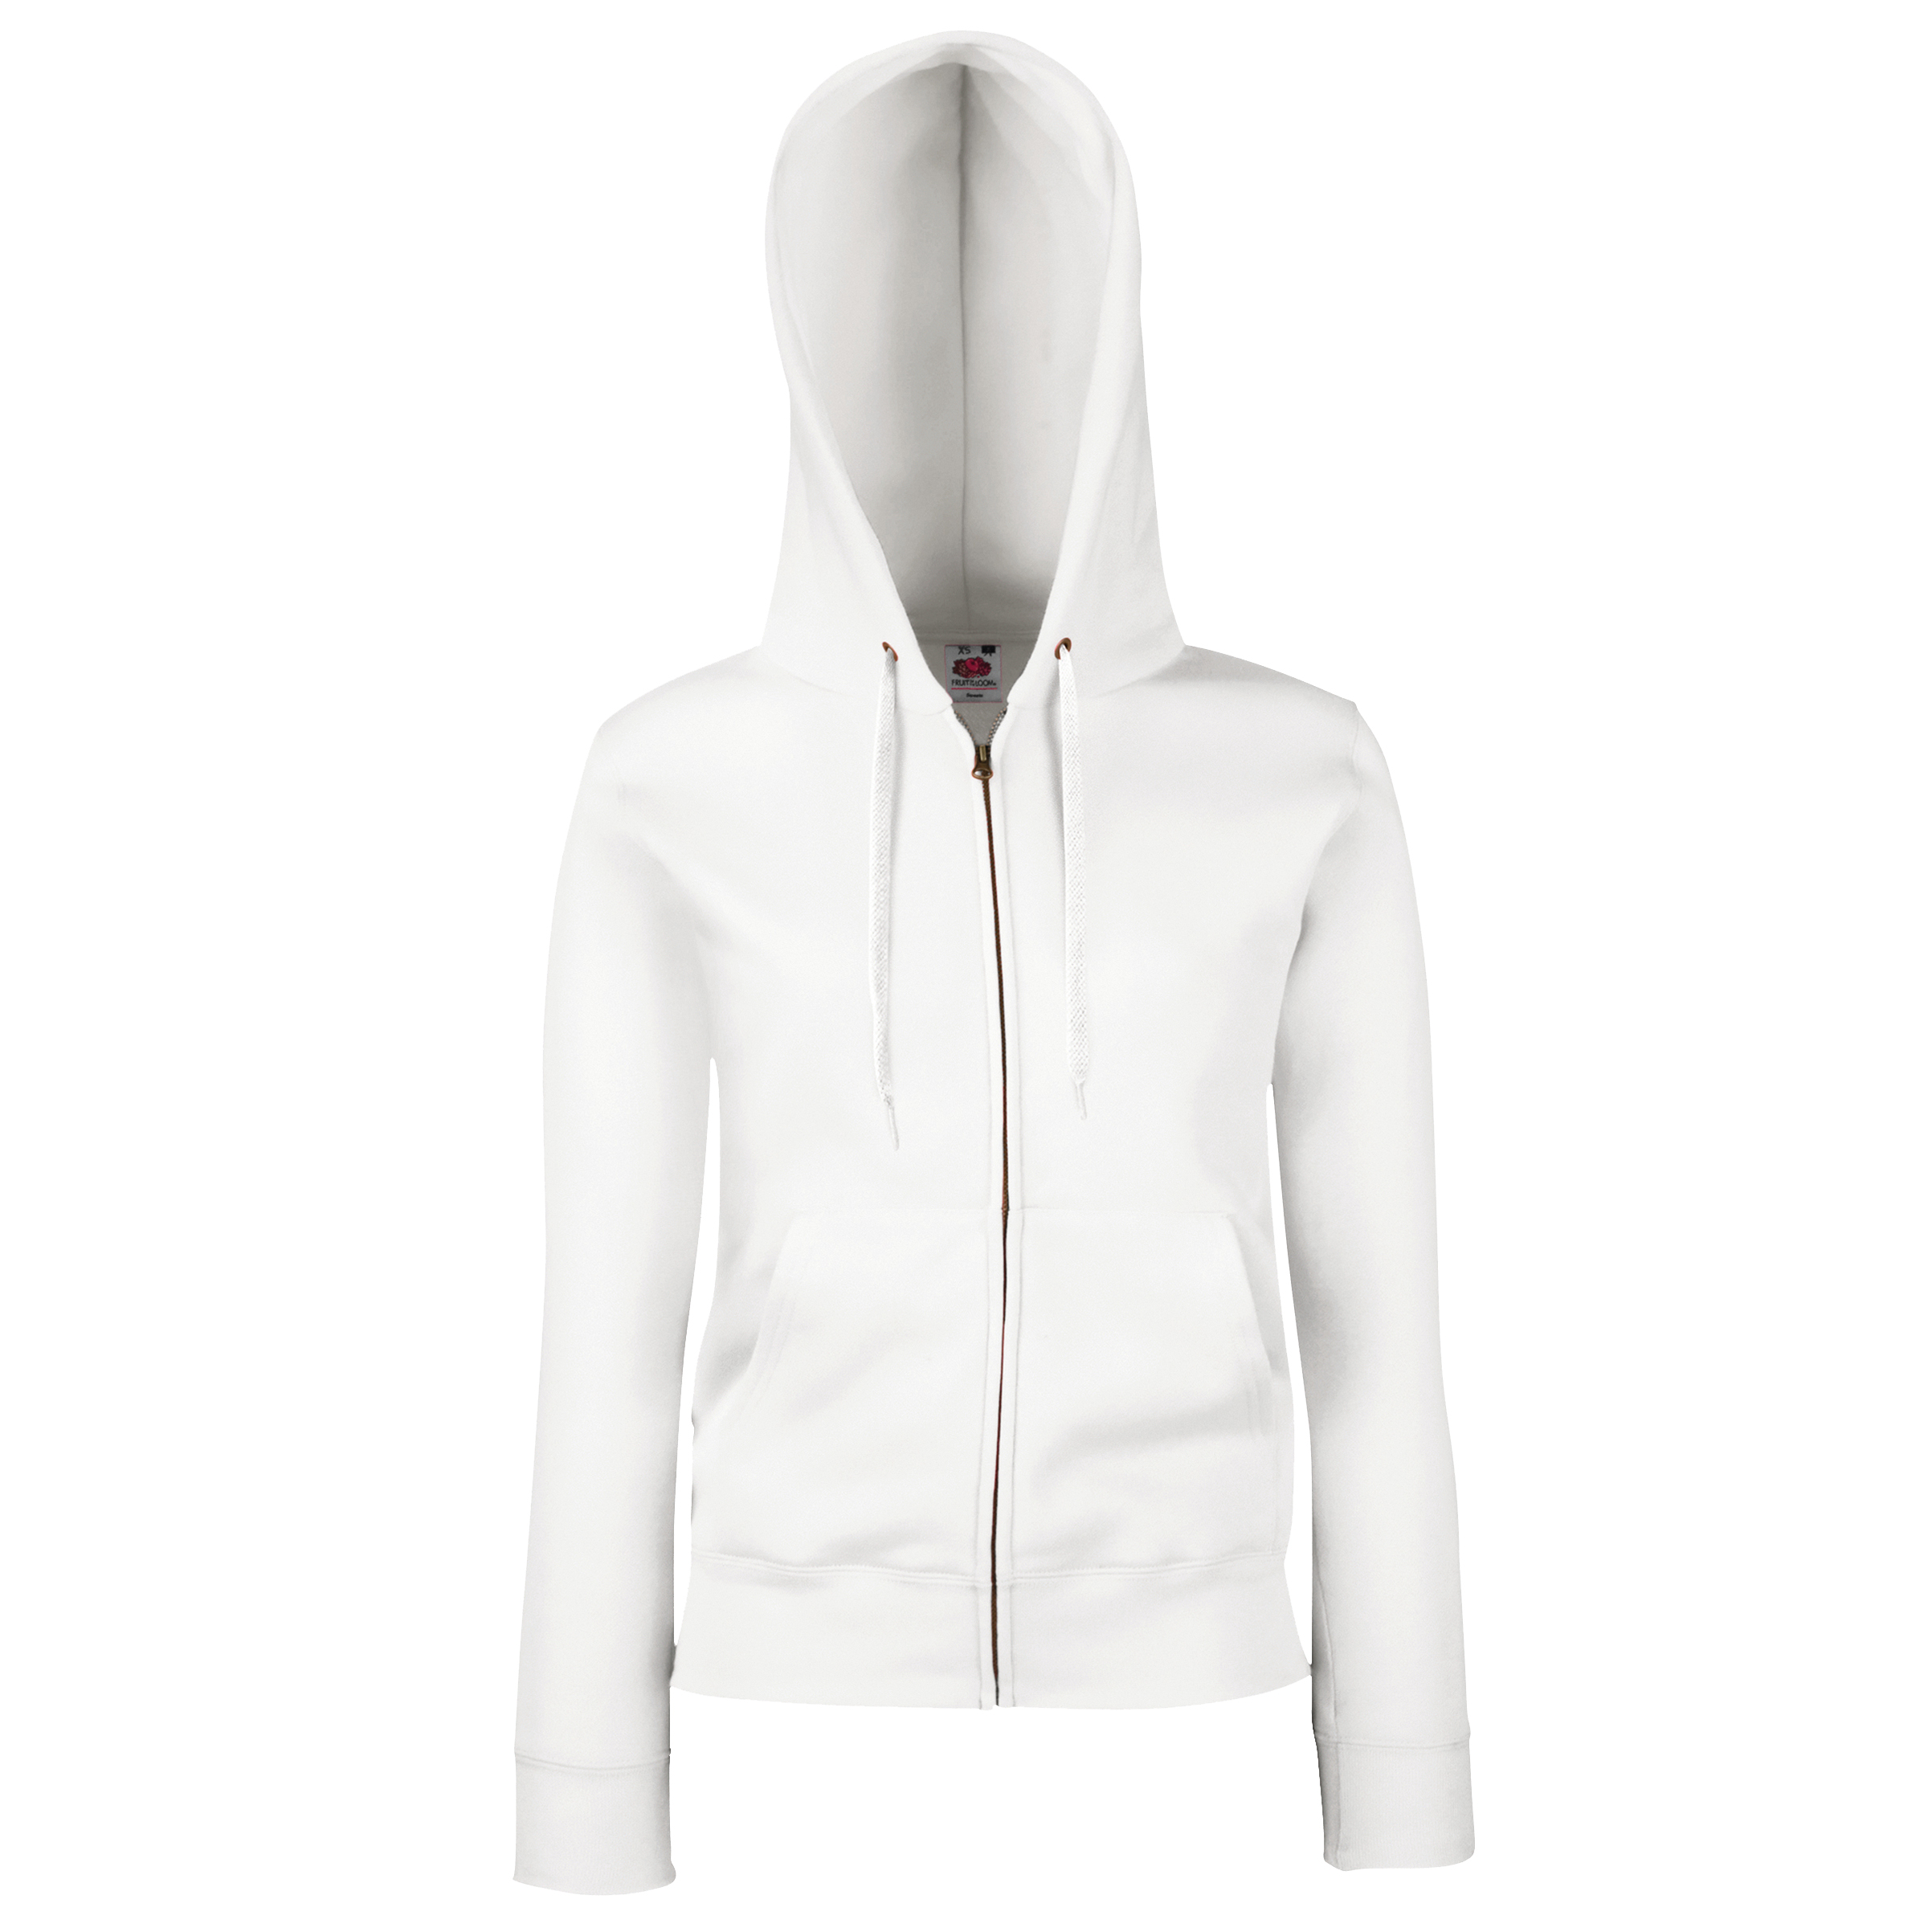 ax-httpswebsystems.s3.amazonaws.comtmp_for_downloadfruit-of-the-loom-womens-premium-70-30-hooded-sweatshirt-jacket-white.jpeg